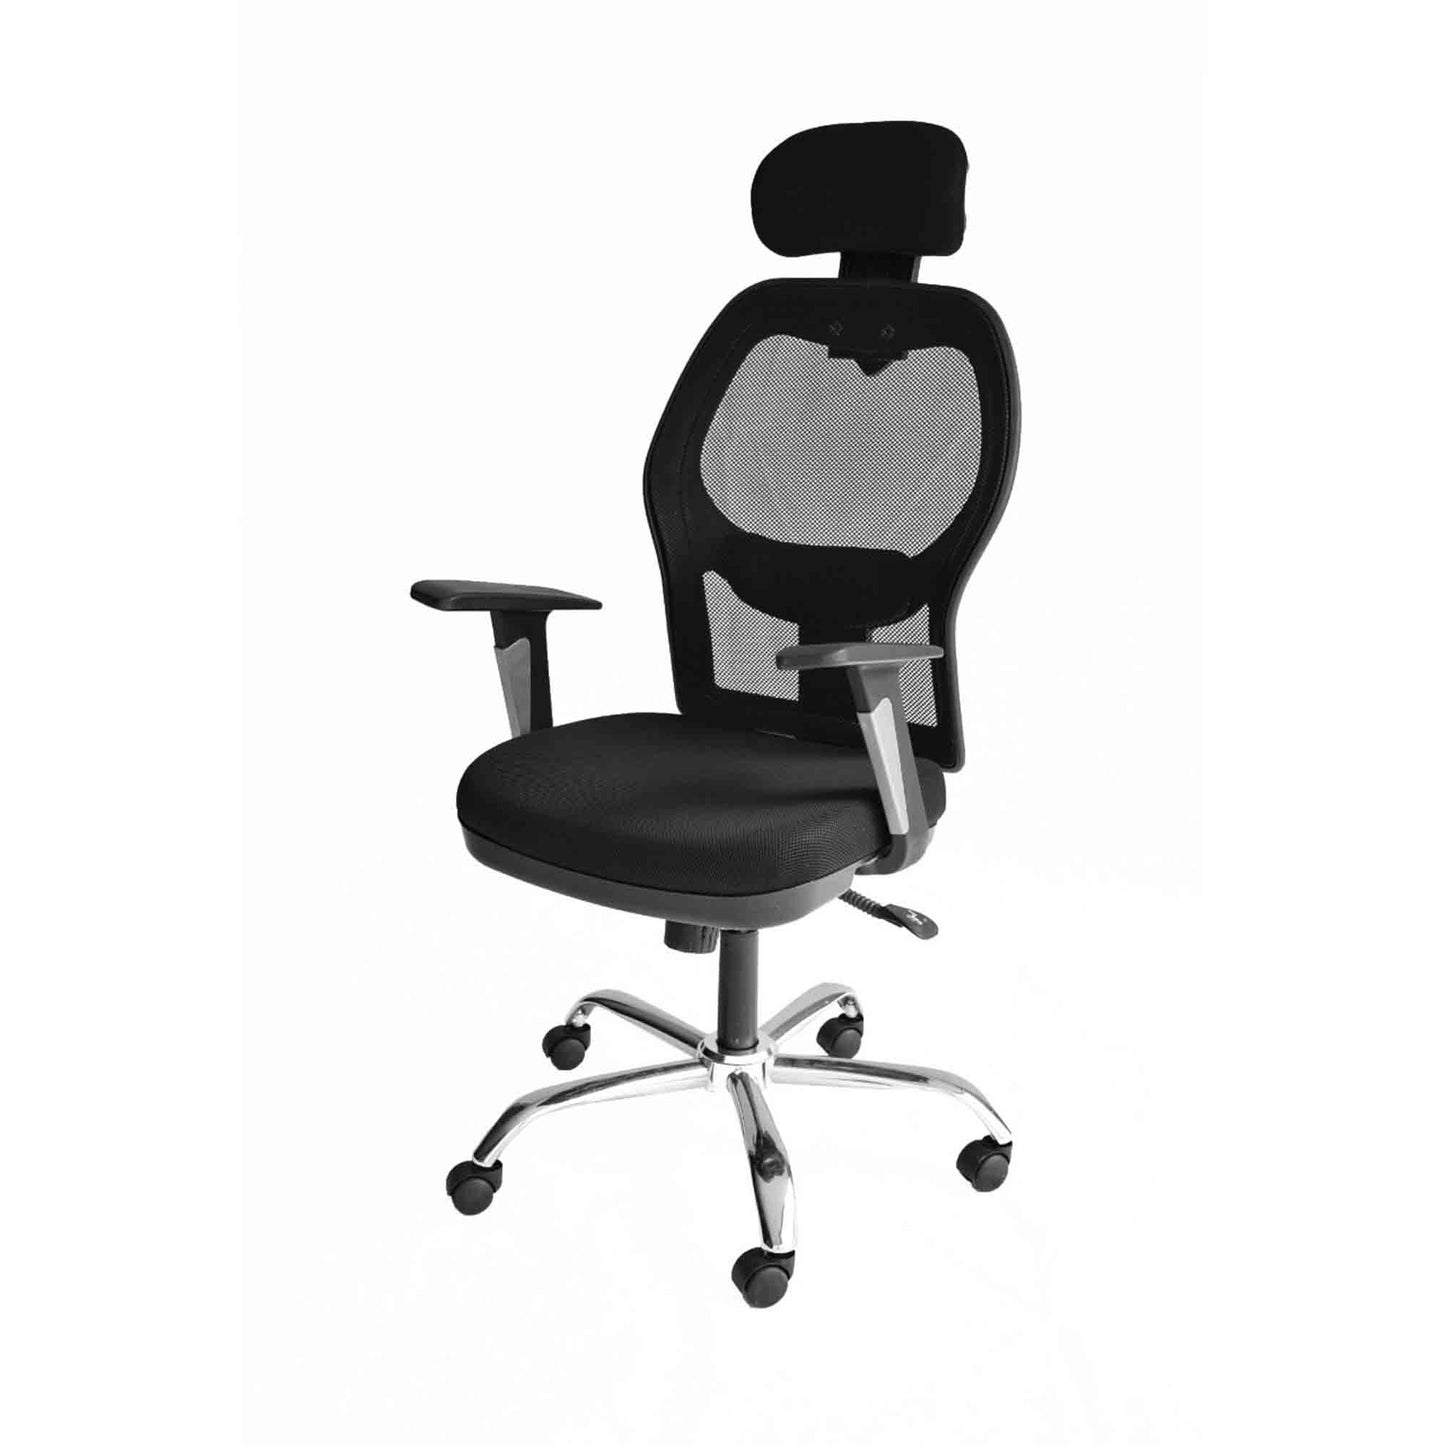 Office Chair - mch78hi